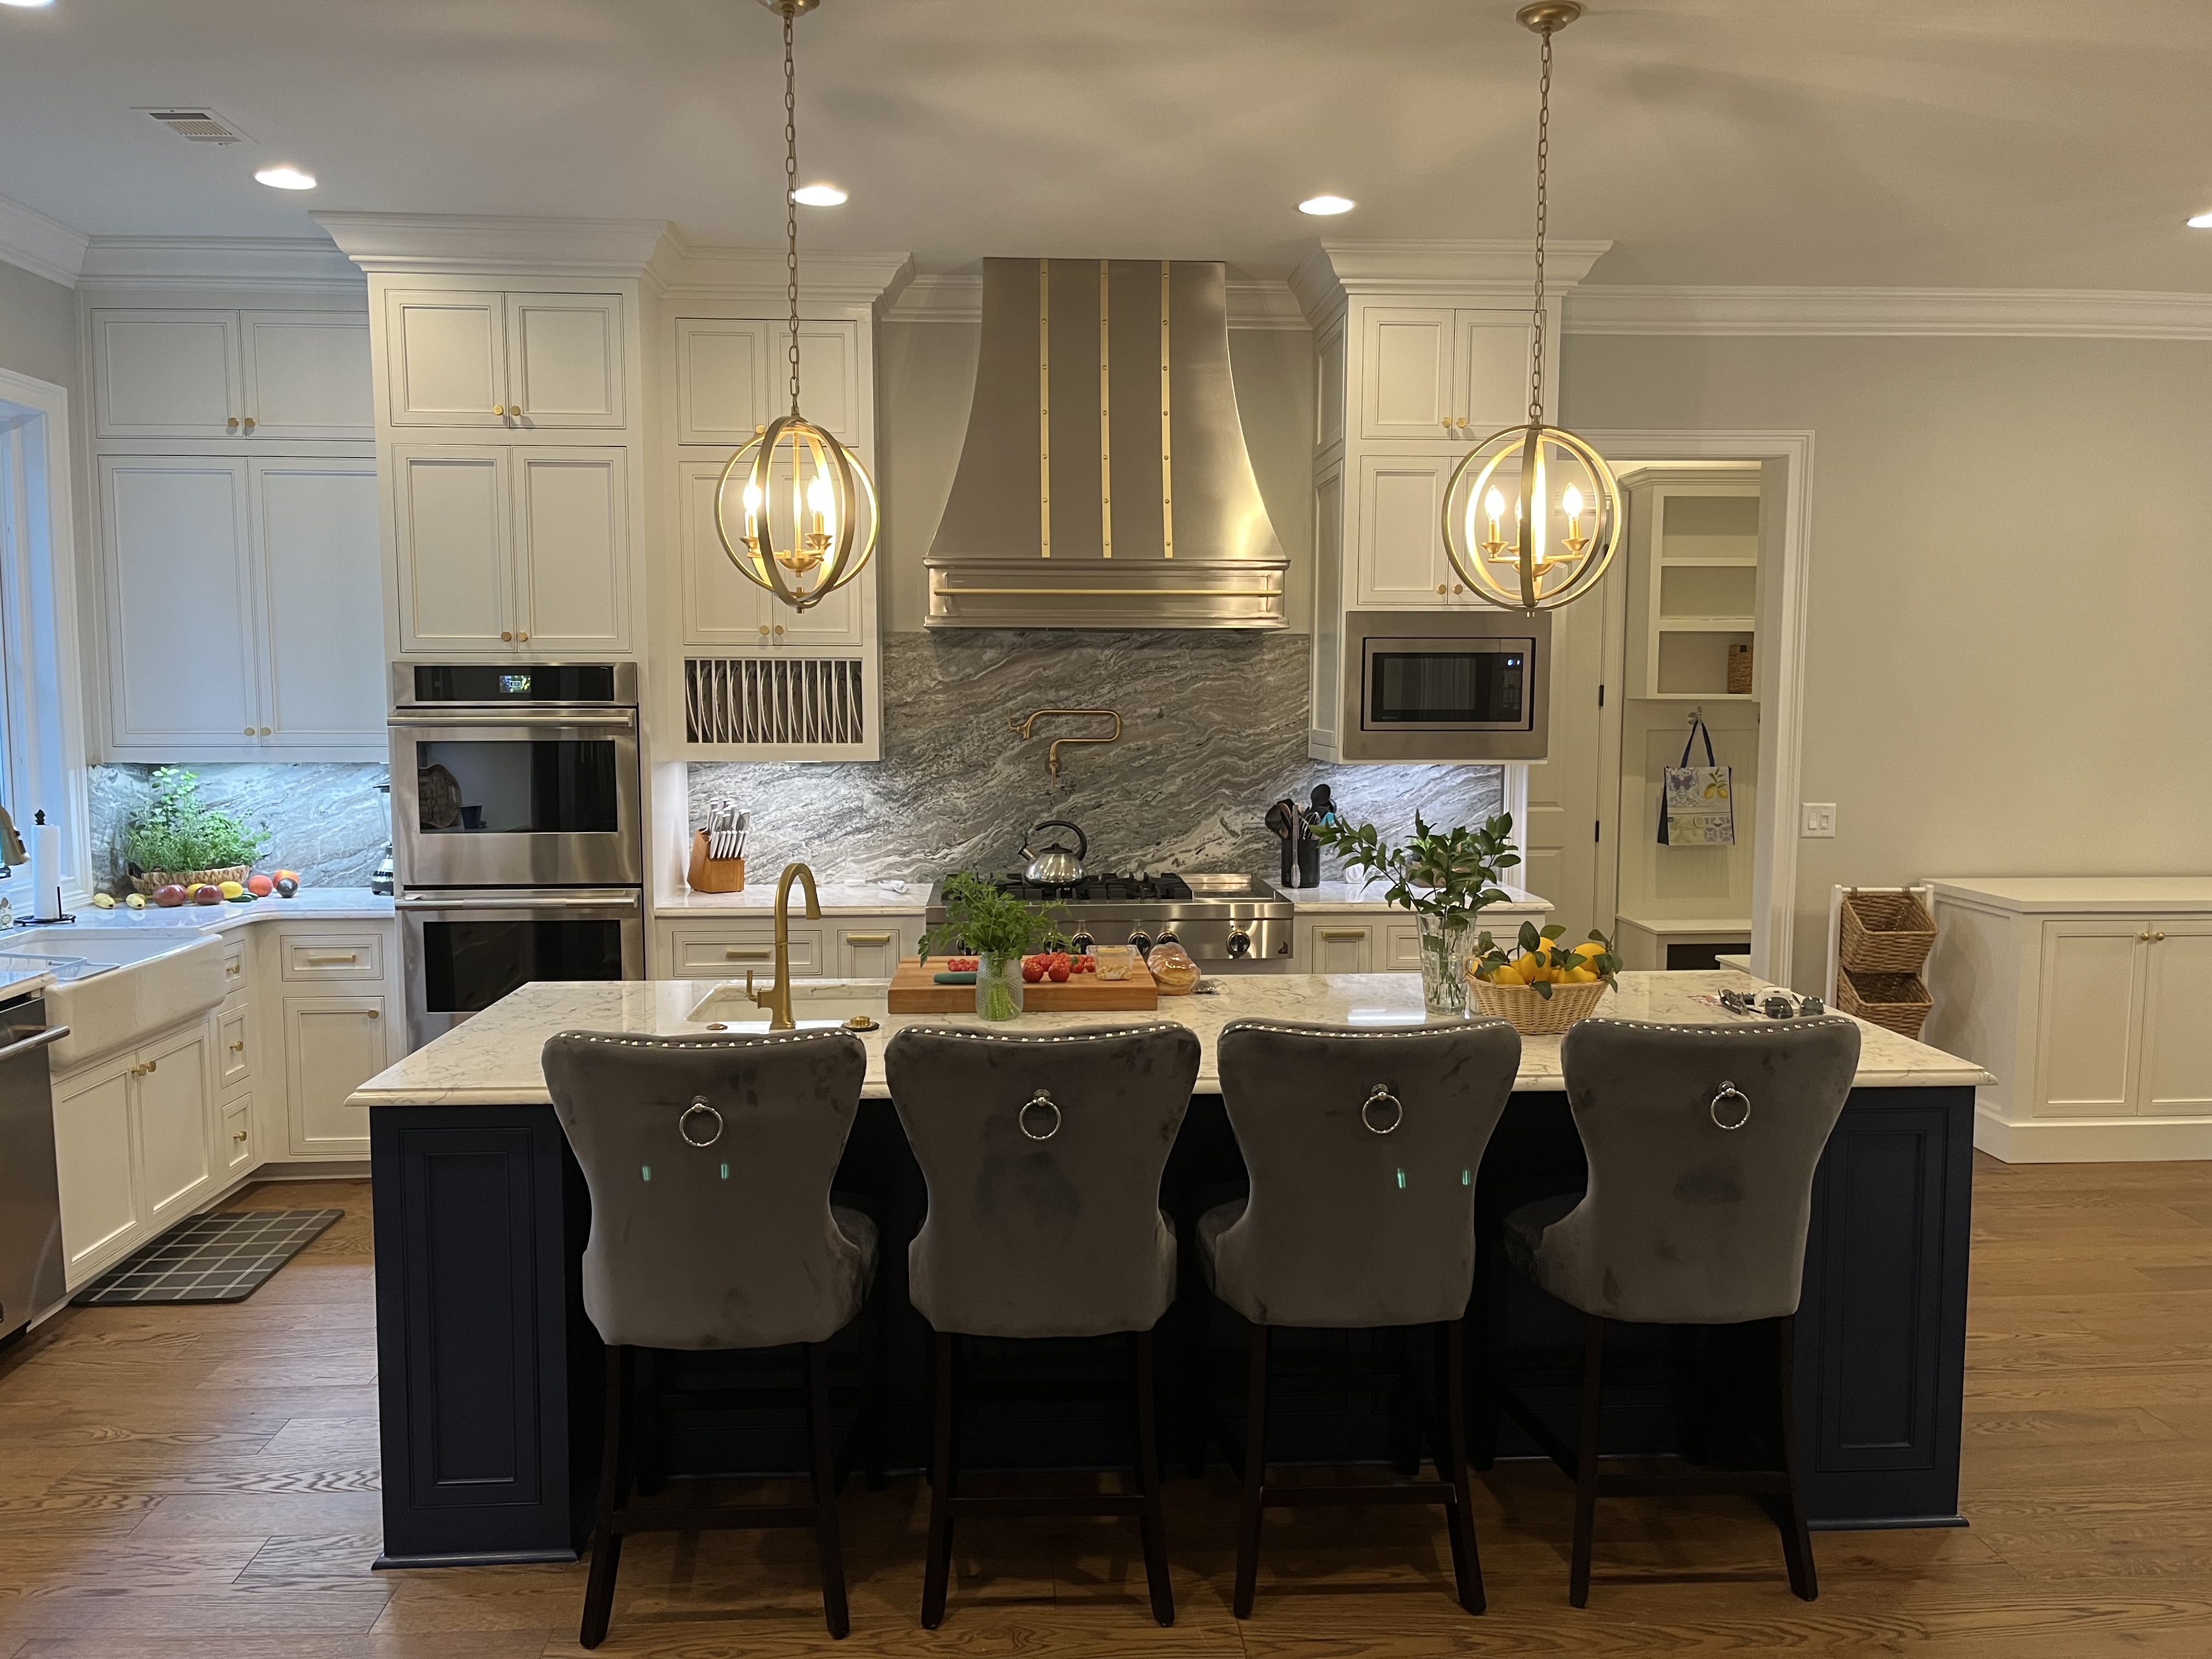 Wonderful kitchen design featuring range hood, white cabinets,marble countertops brick backsplash